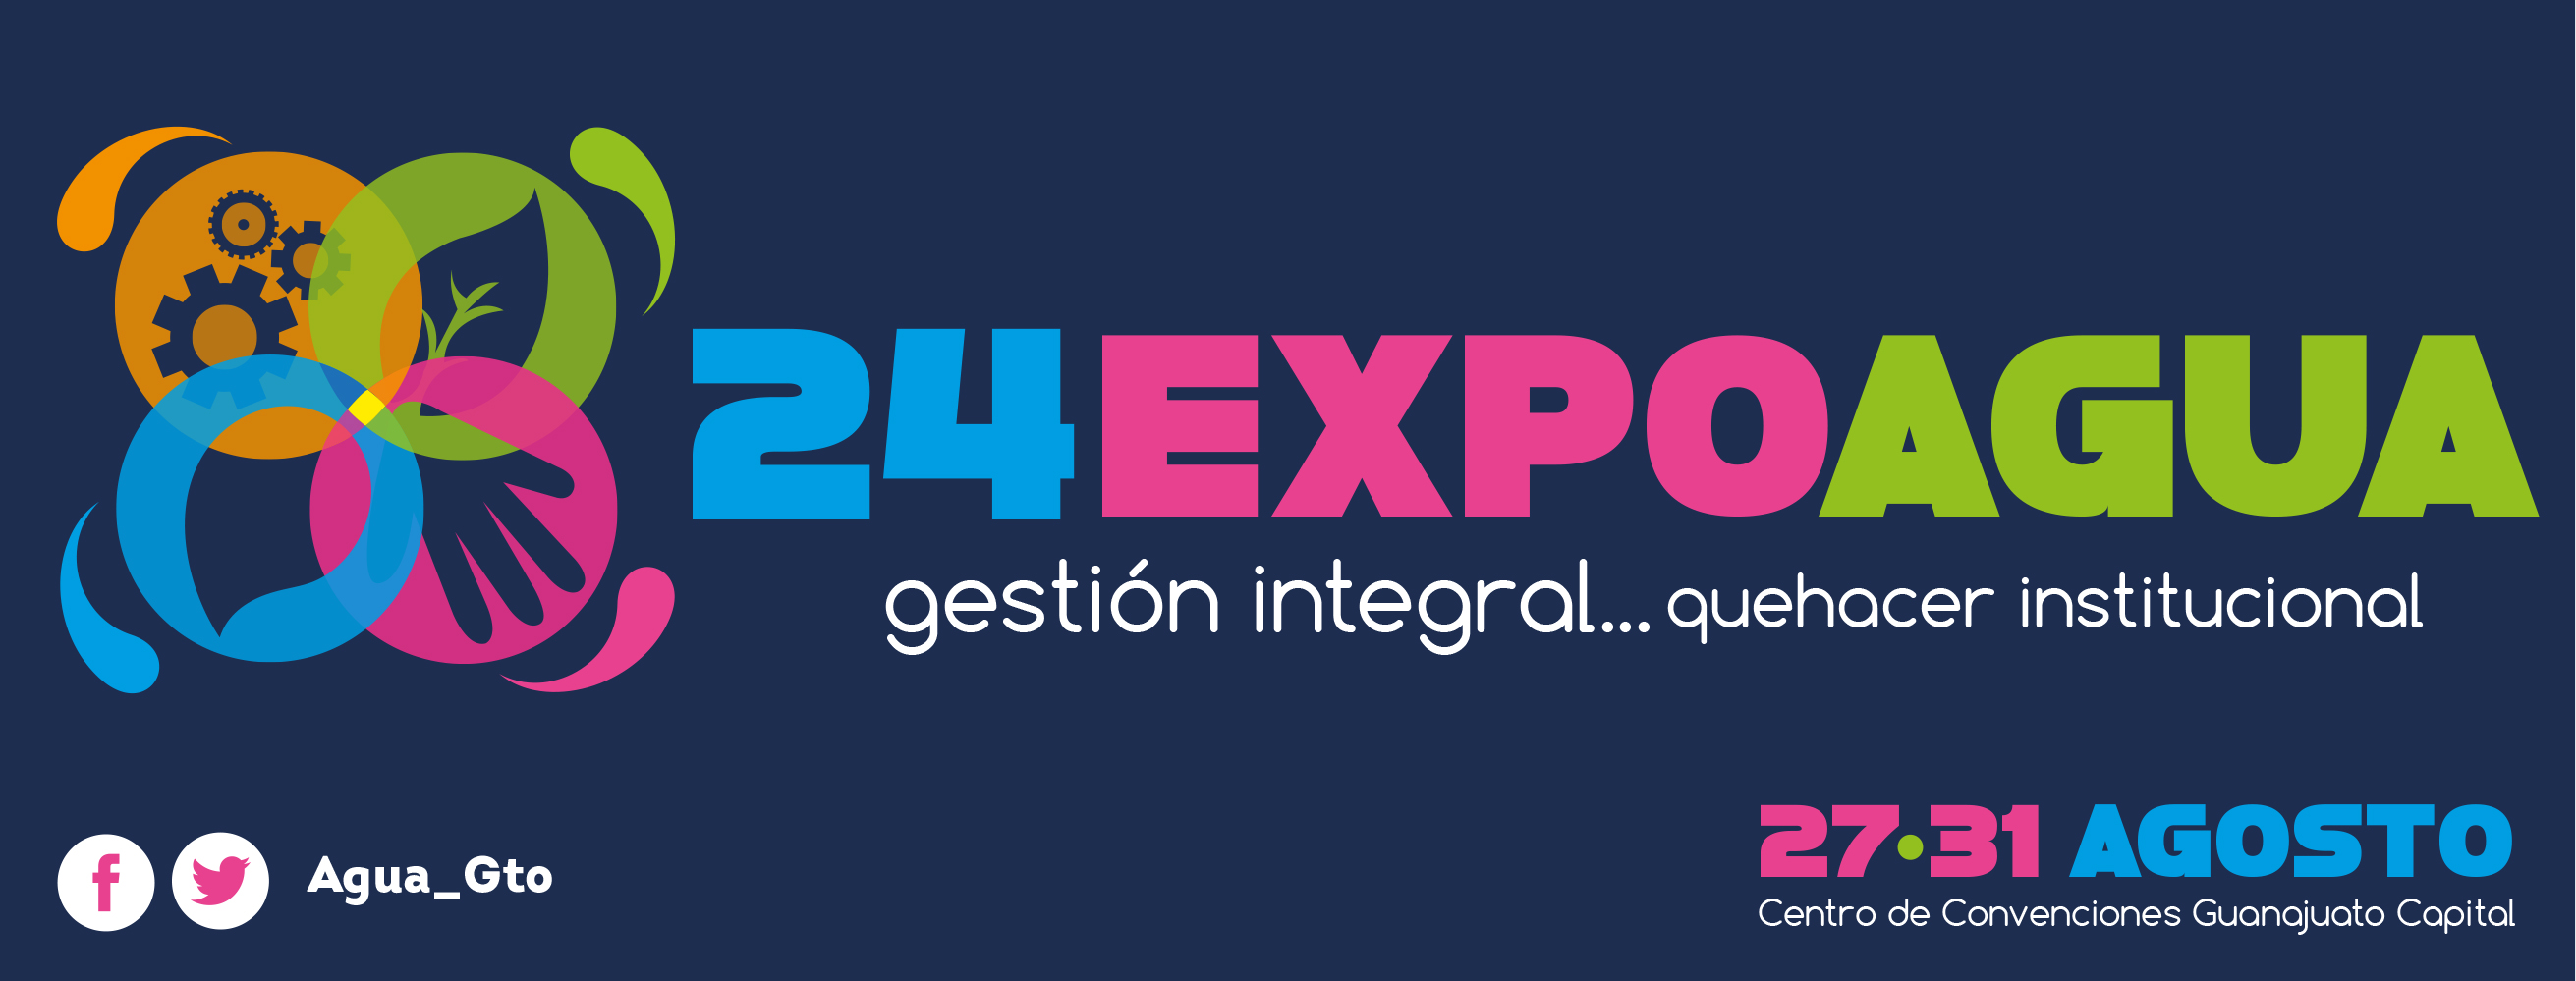 Banner Expo Agua